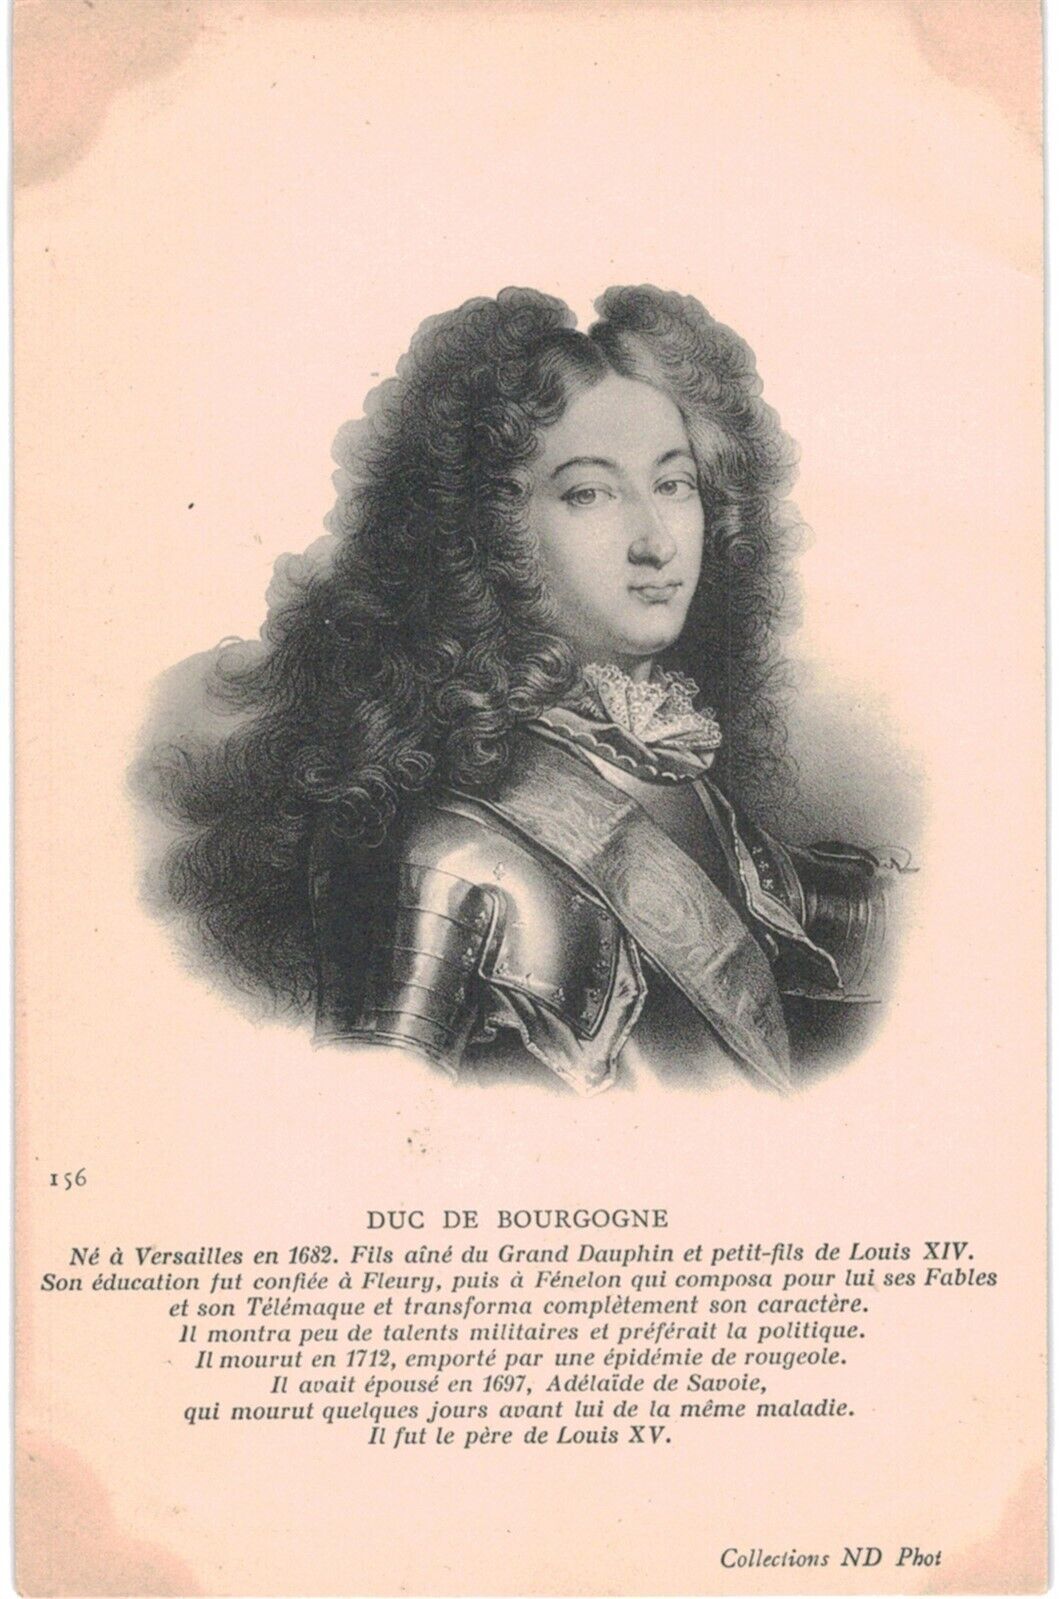 Duc De Bourgogne Fine French Litho Portrait Neurdein 156 1901 